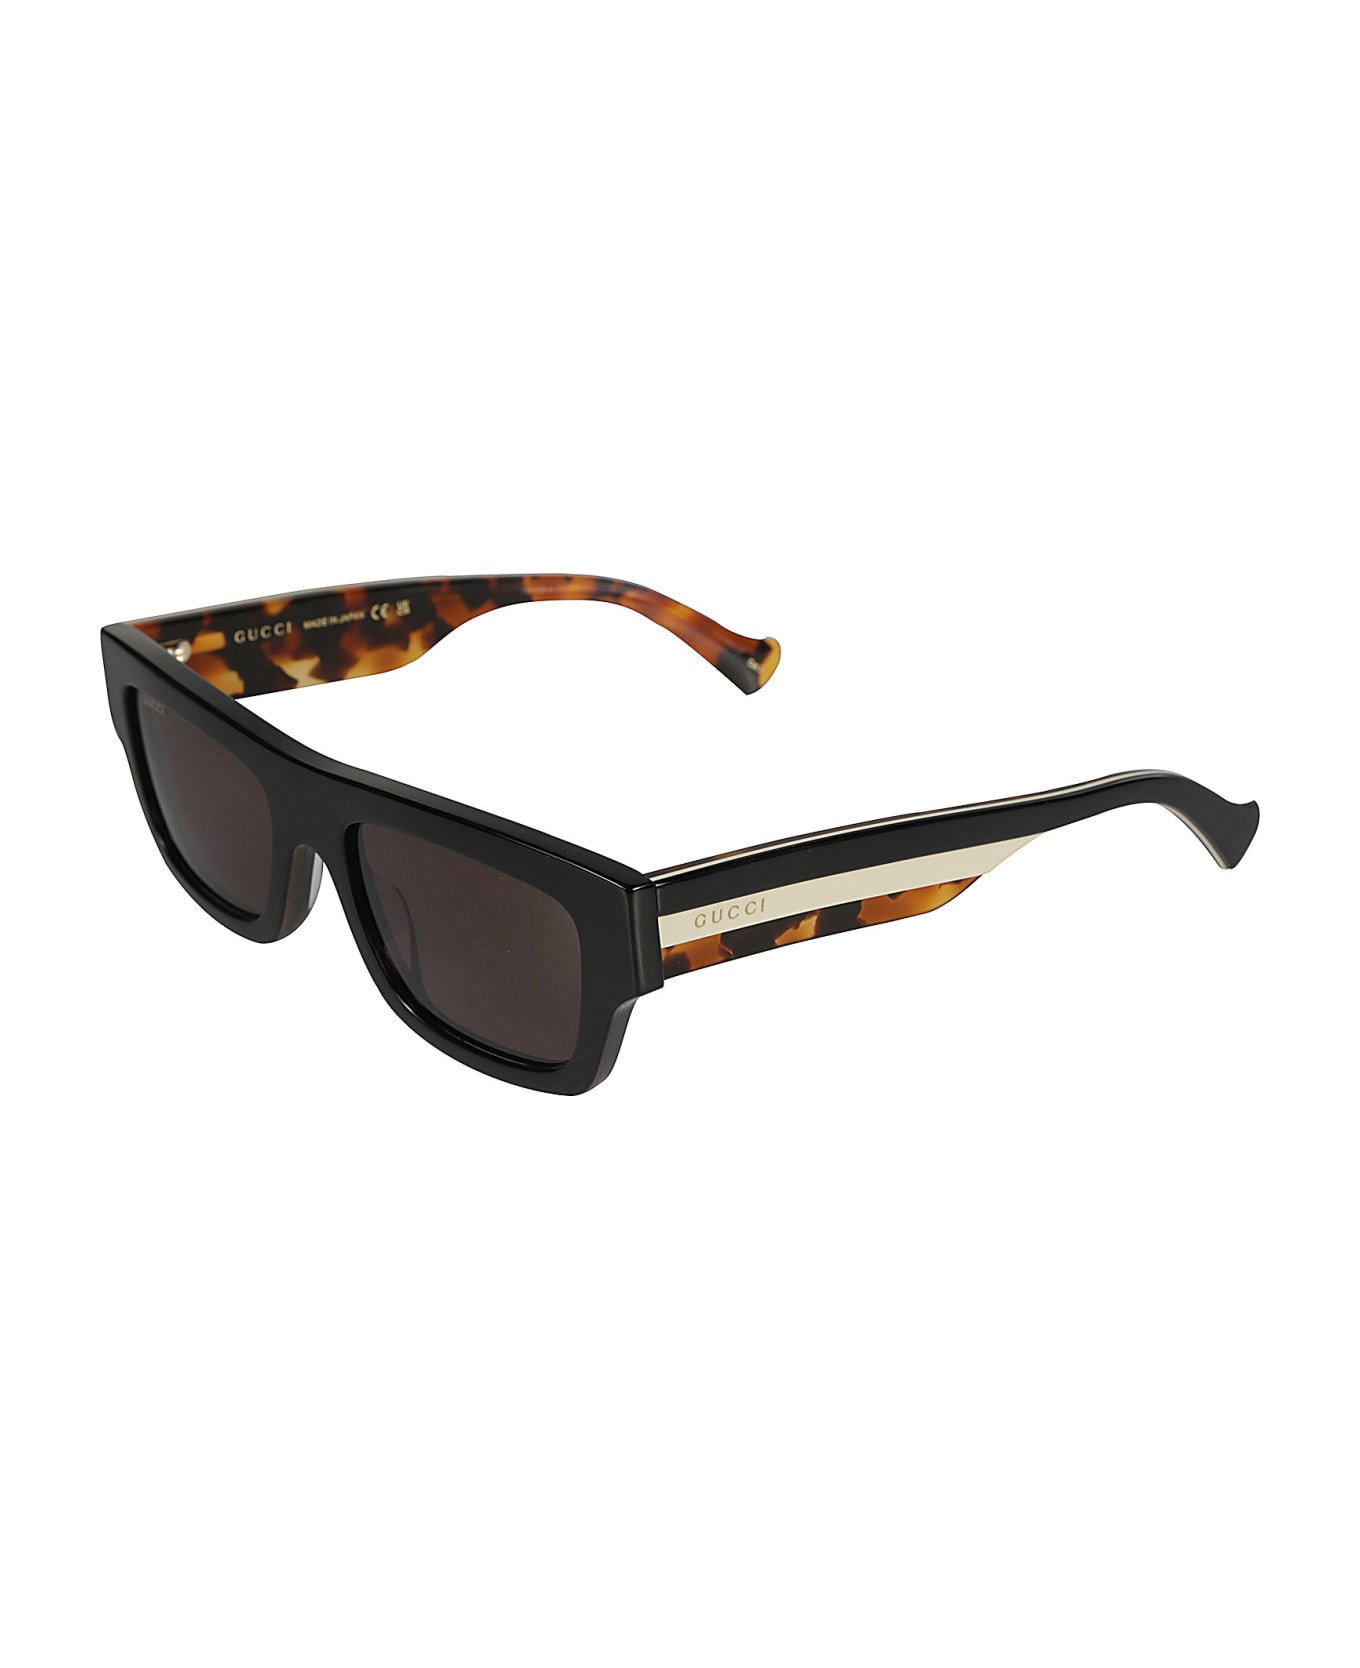 Gucci Eyewear Flame Effect Classic Sunglasses - Black/Brown